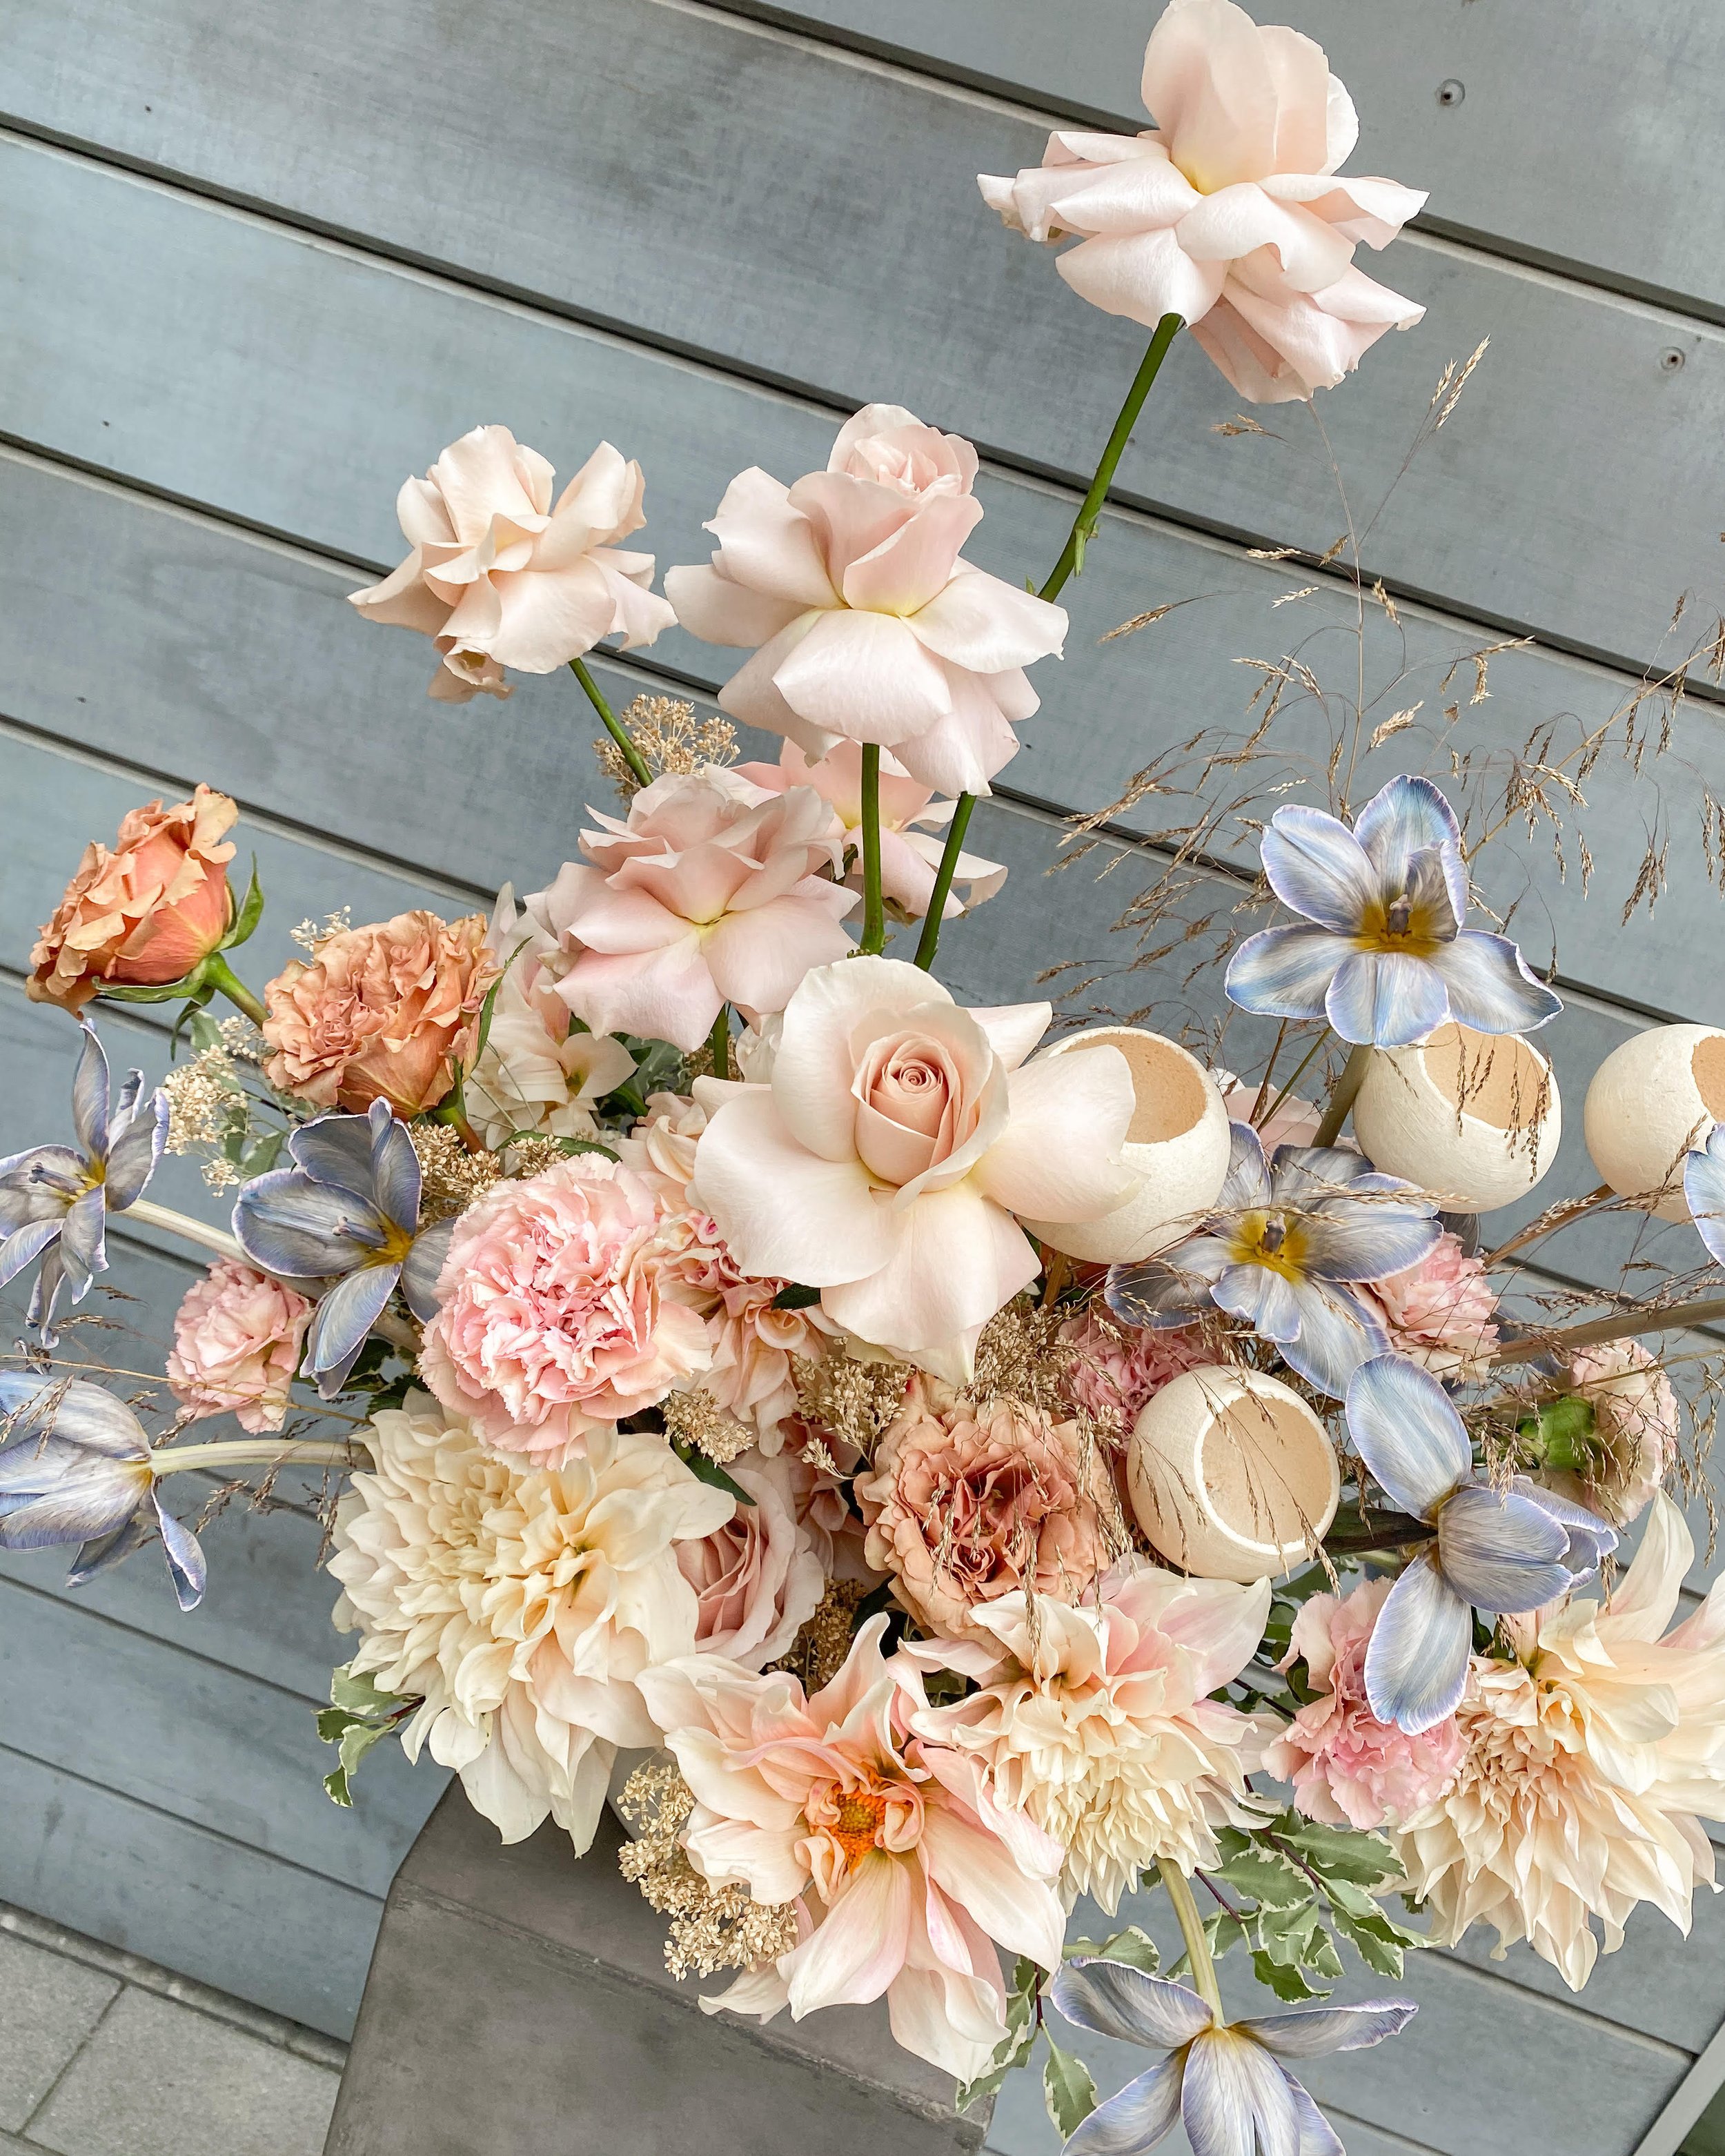 Flower Bouquets - Artificial Silk Flower Arrangements